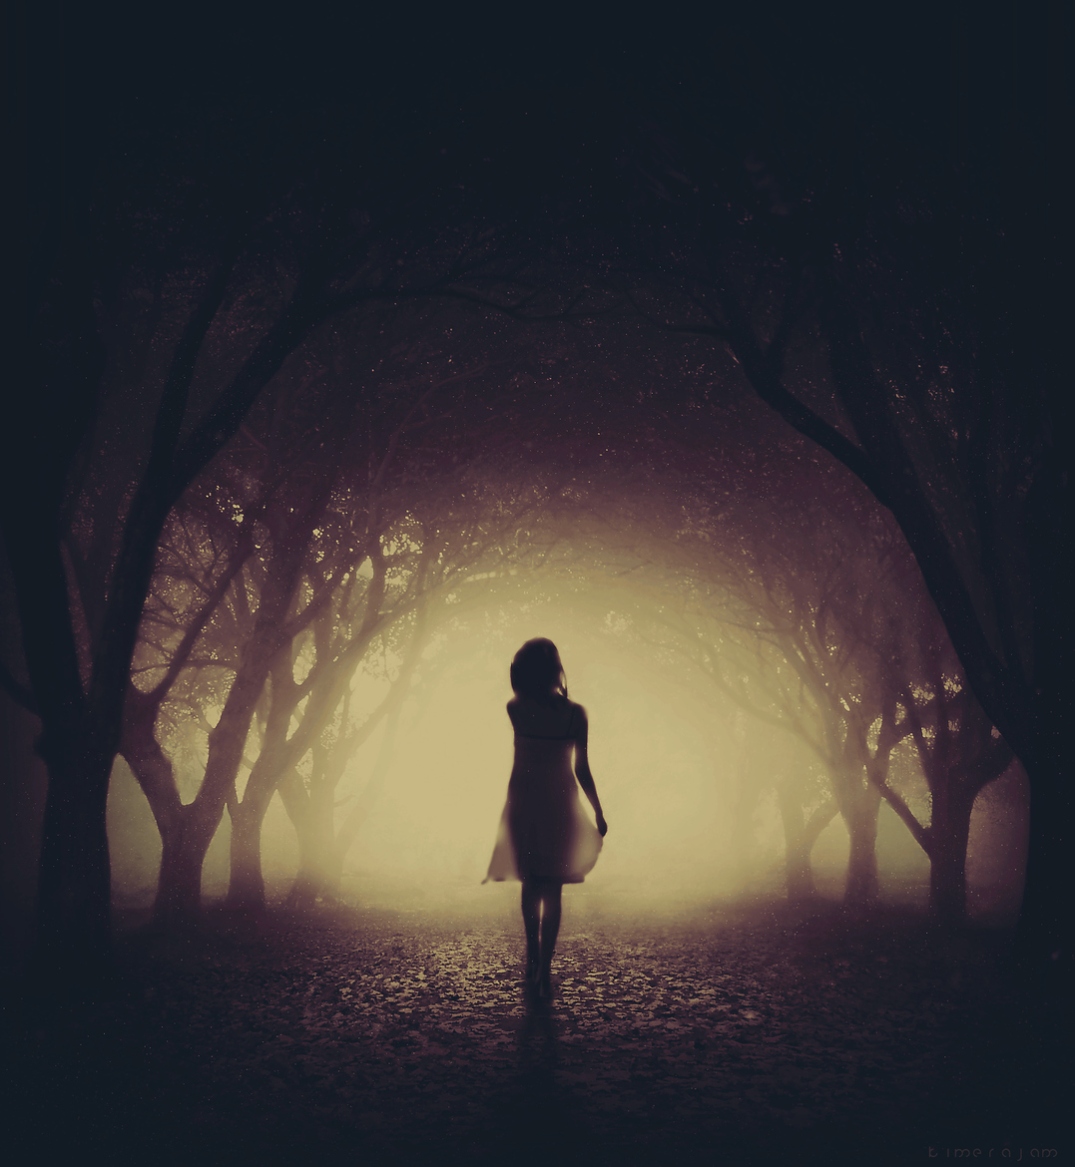 the-dark-alley-photography-by-kimera-jam-body-girl-shadows-fog-mist